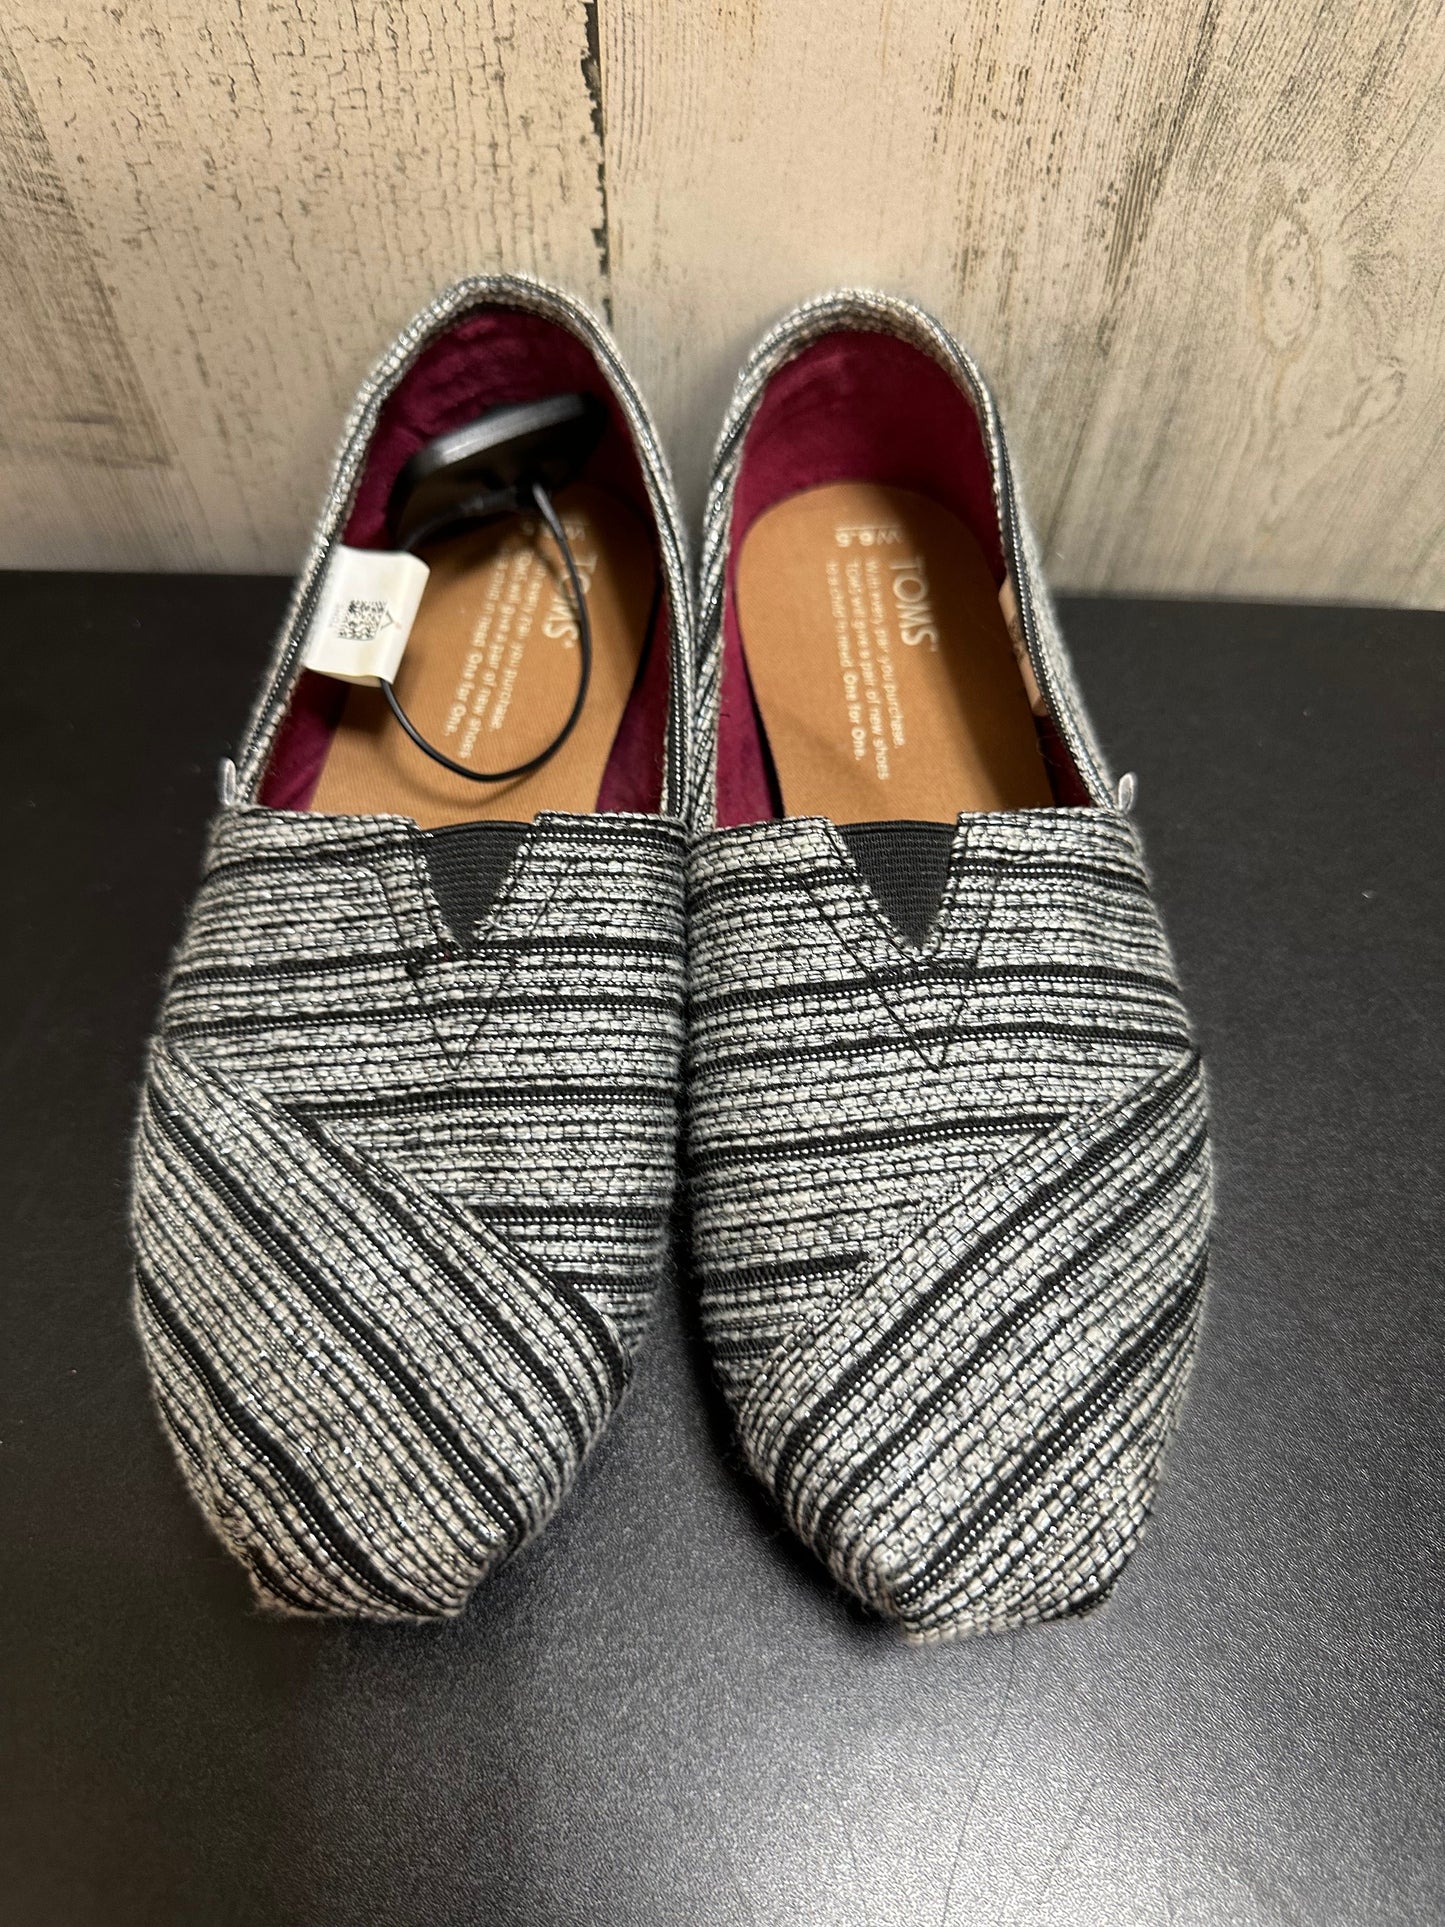 Grey Shoes Flats Toms, Size 6.5